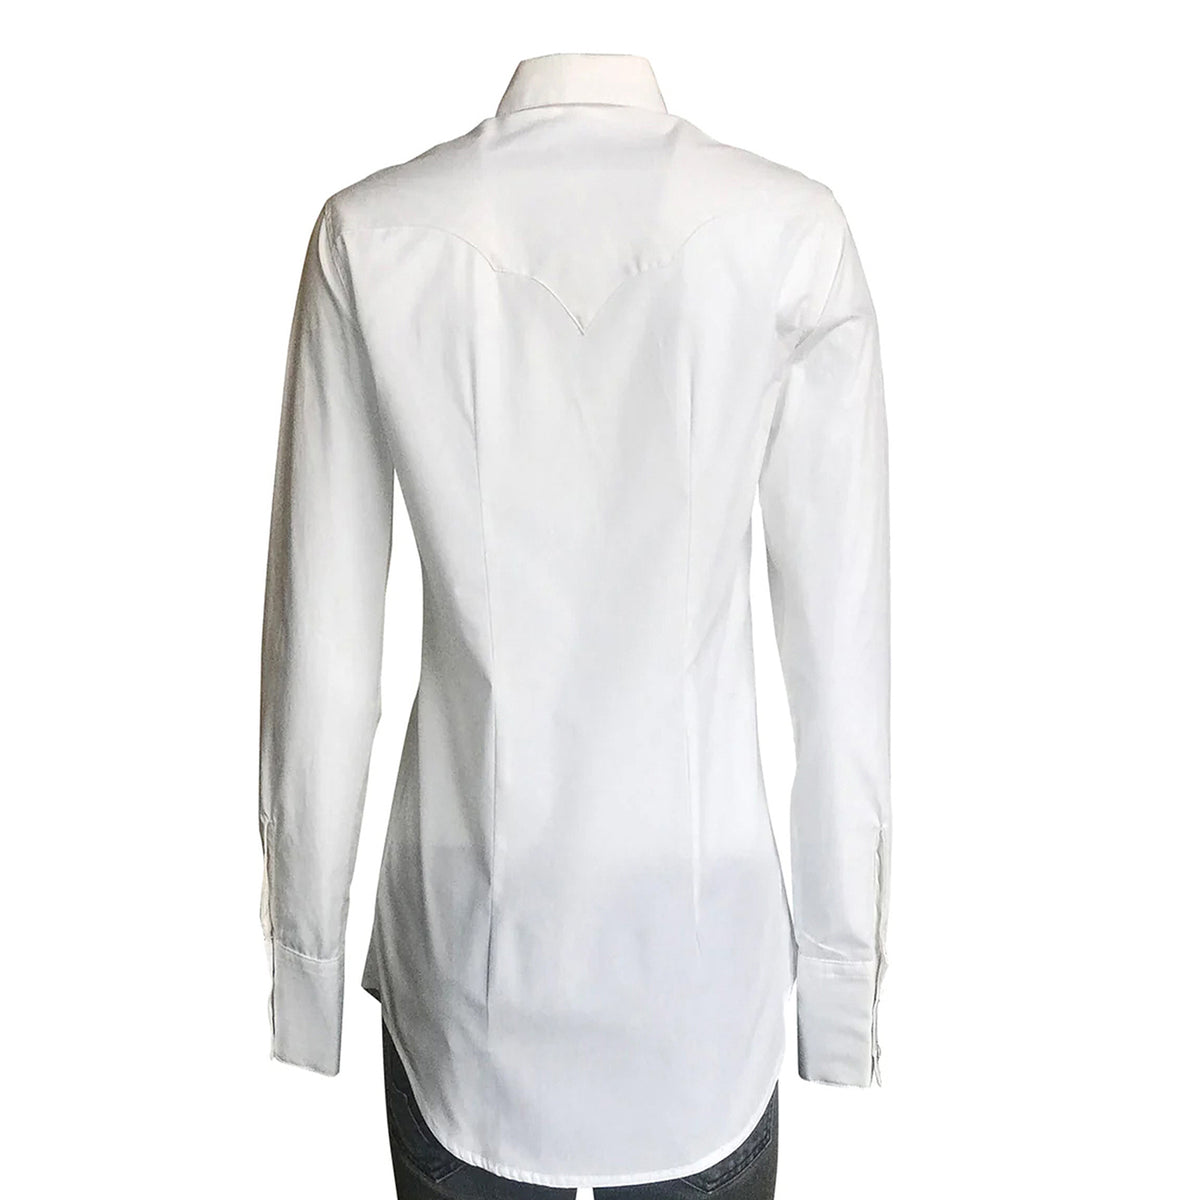 Women's Classic Pima Cotton Solid White Western Shirt